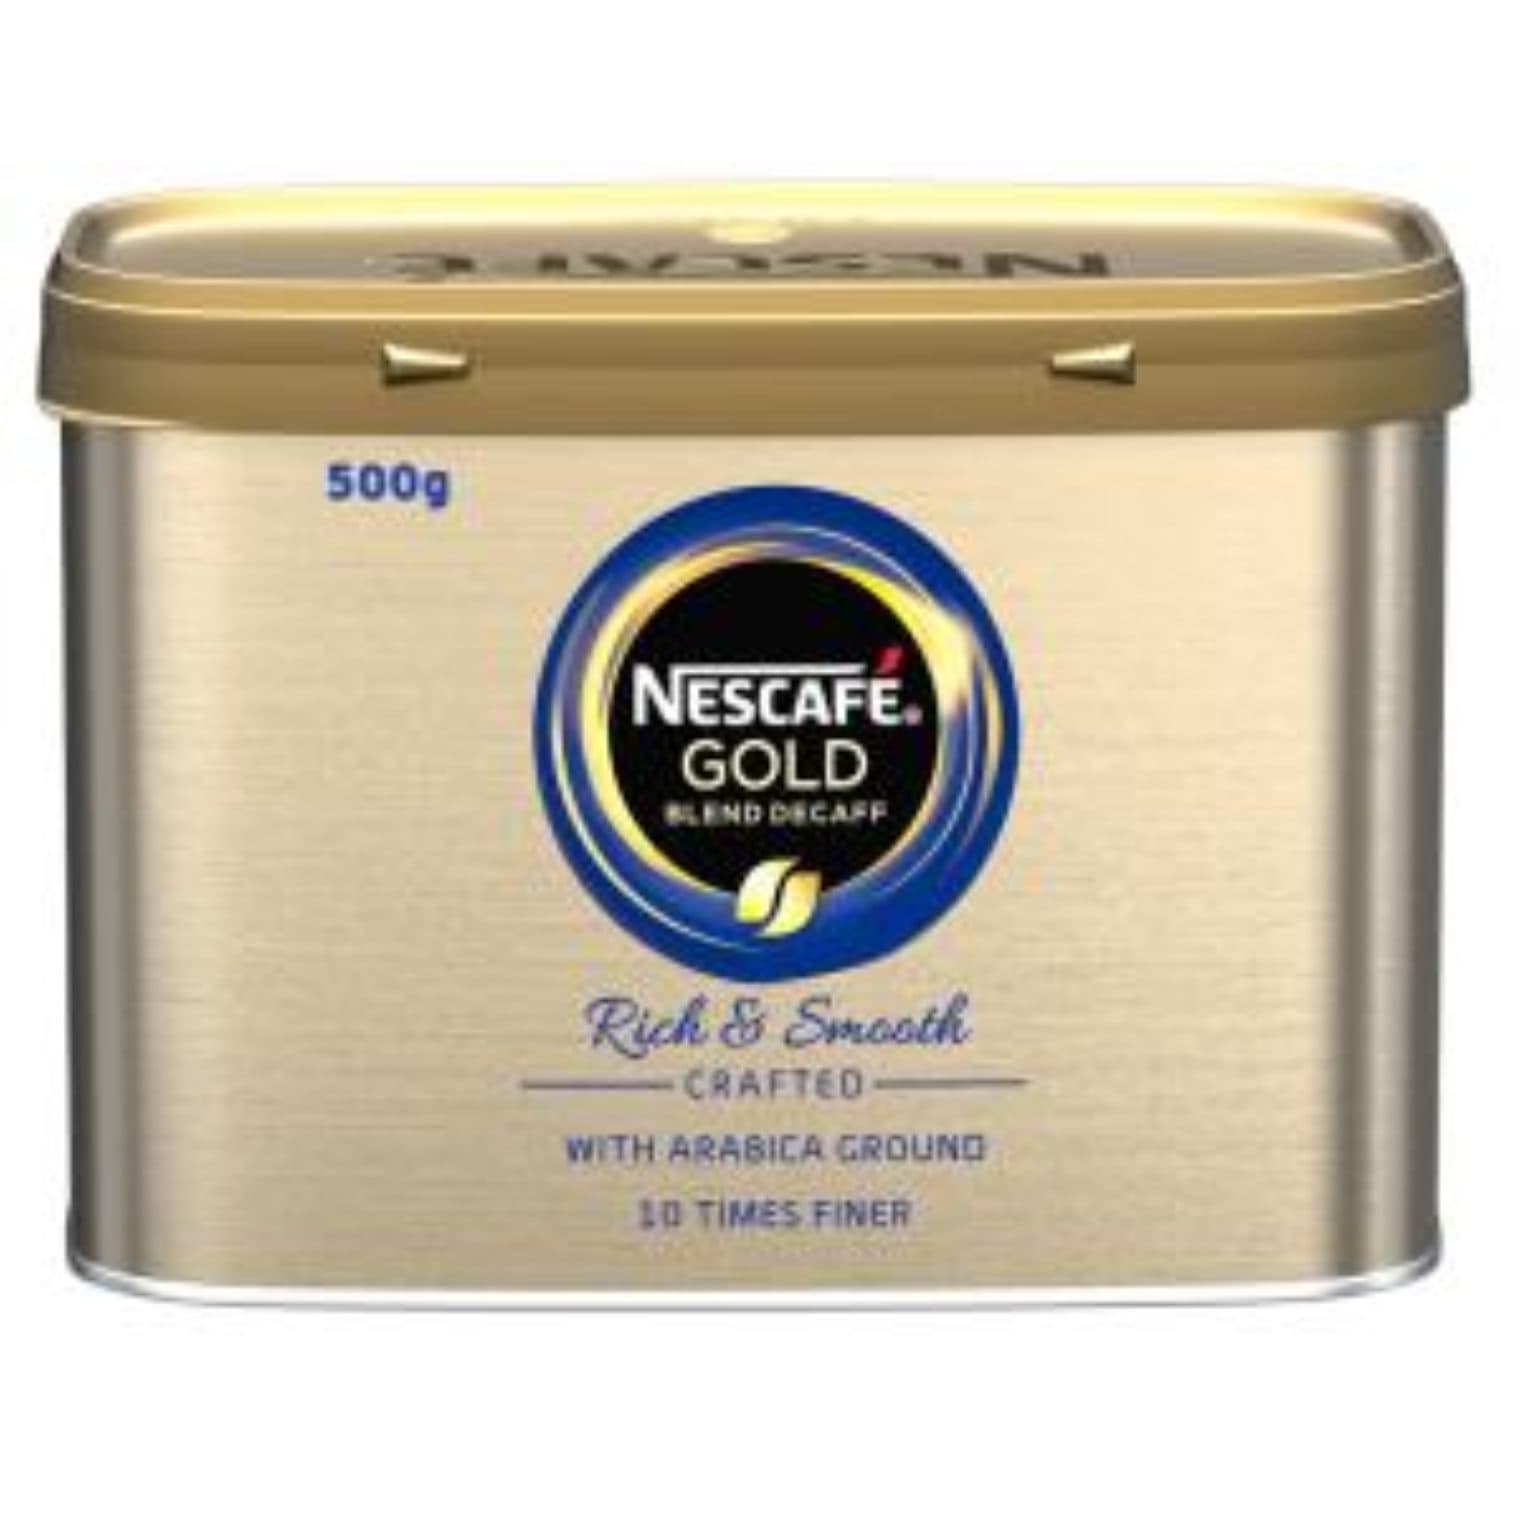 Nescafe Gold Blend Decaffeinated Coffee 500g